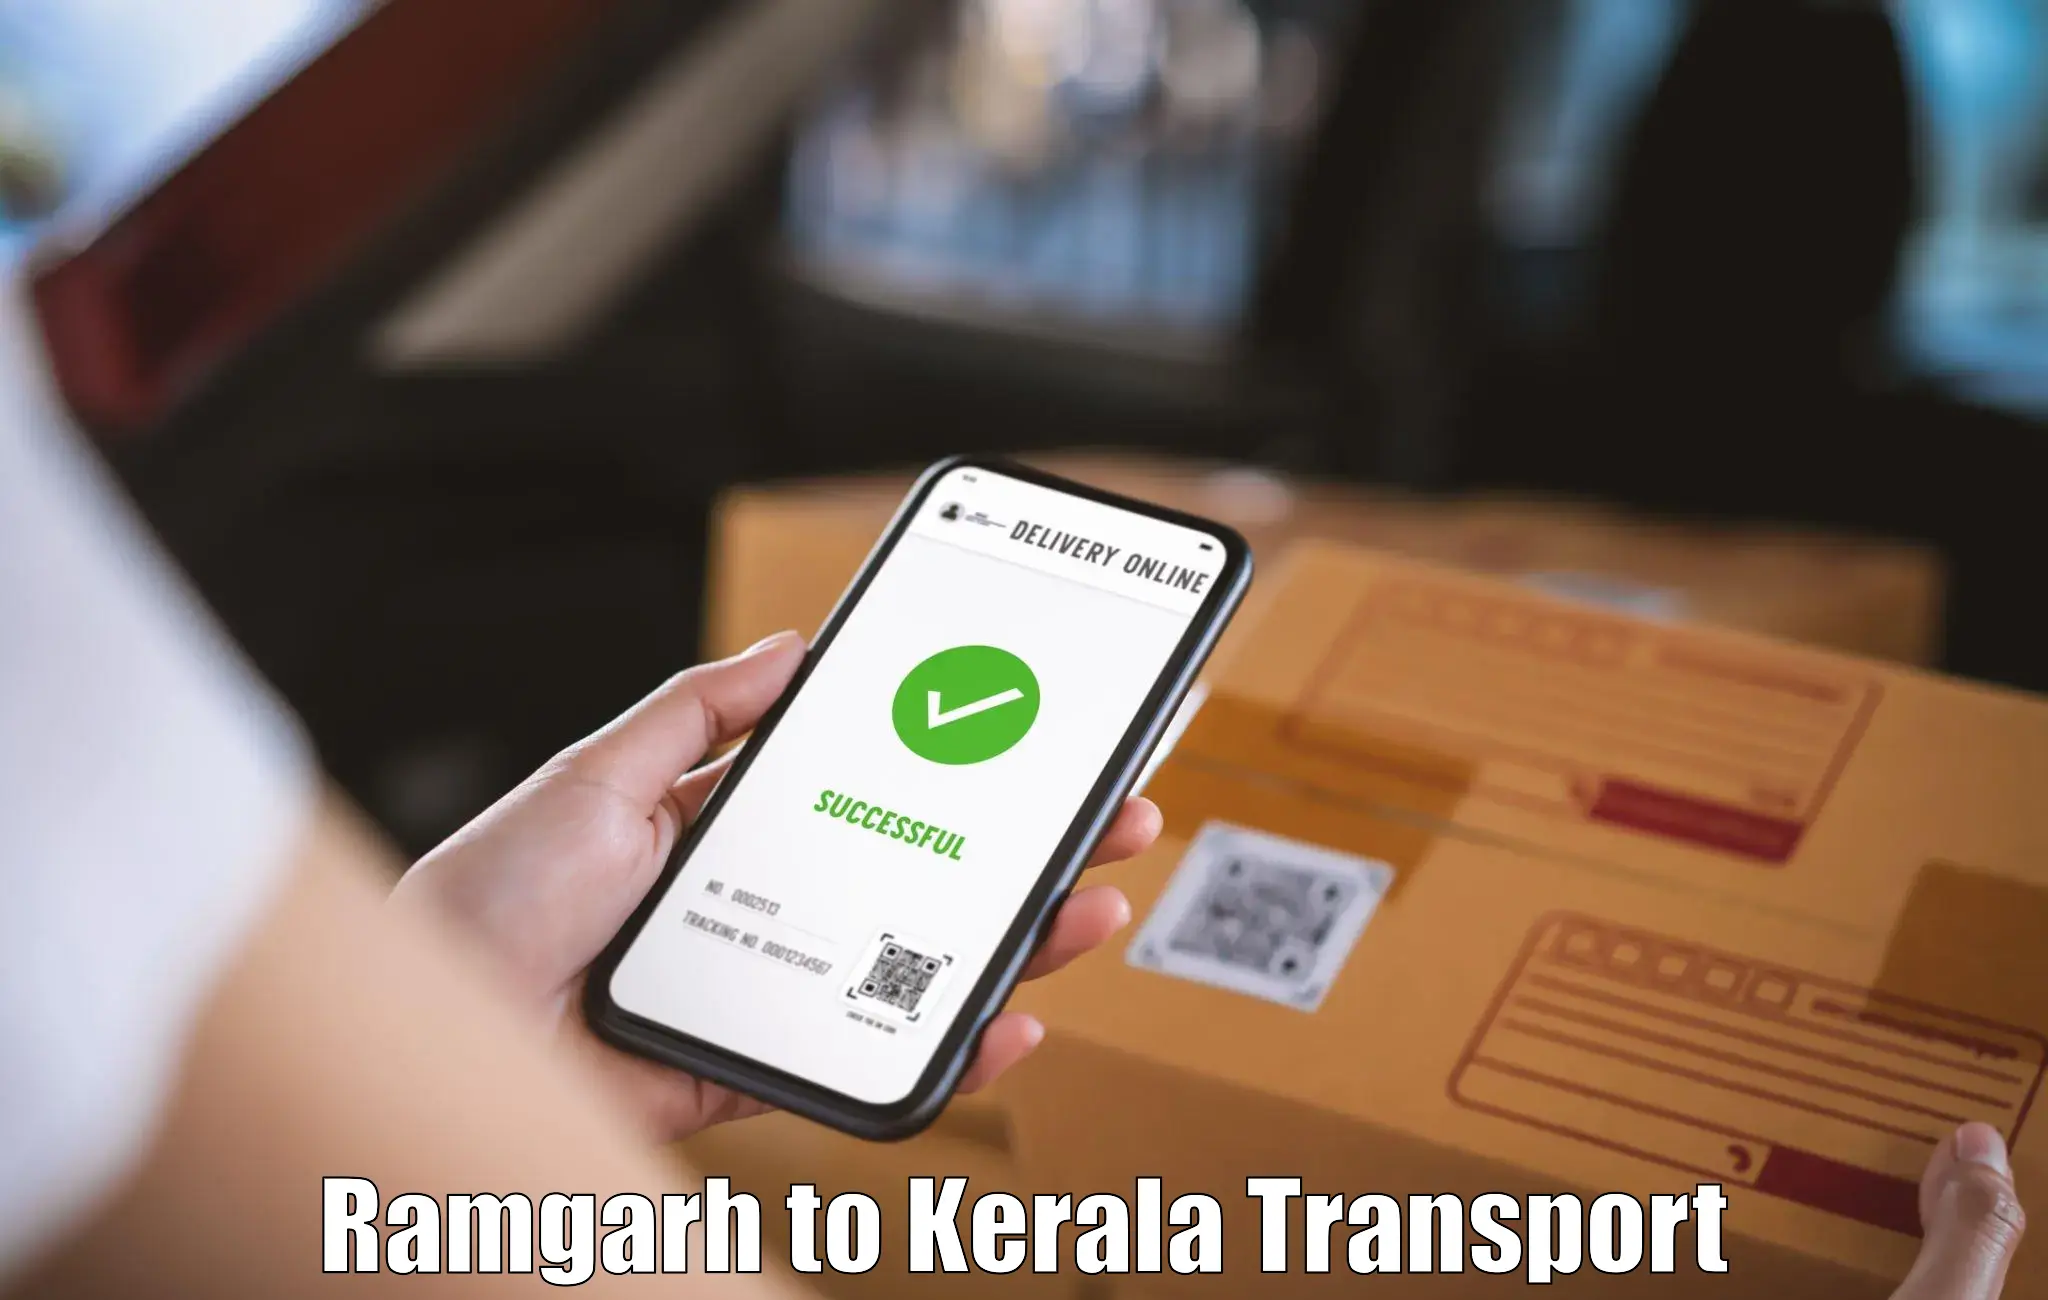 Delivery service Ramgarh to Vadakkencherry